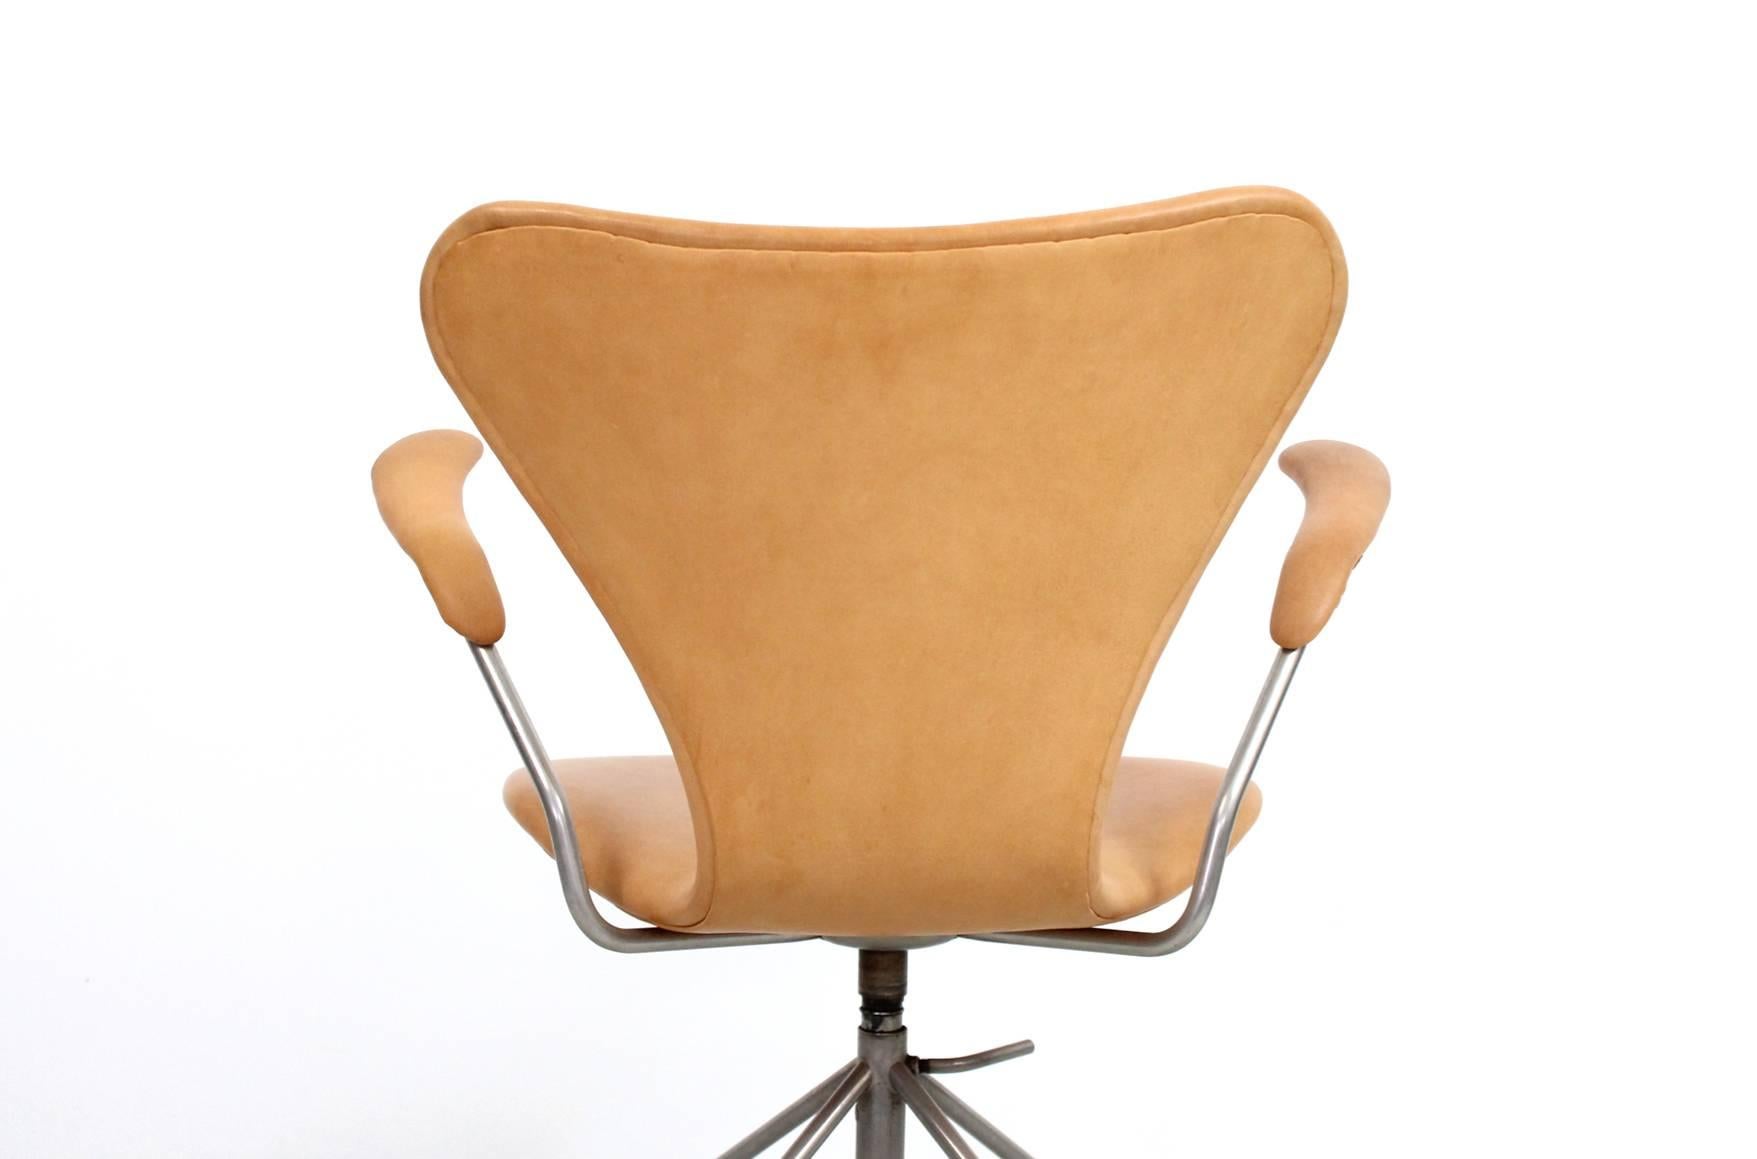 Mid-20th Century Sevener Desk Chair by Arne Jacobsen